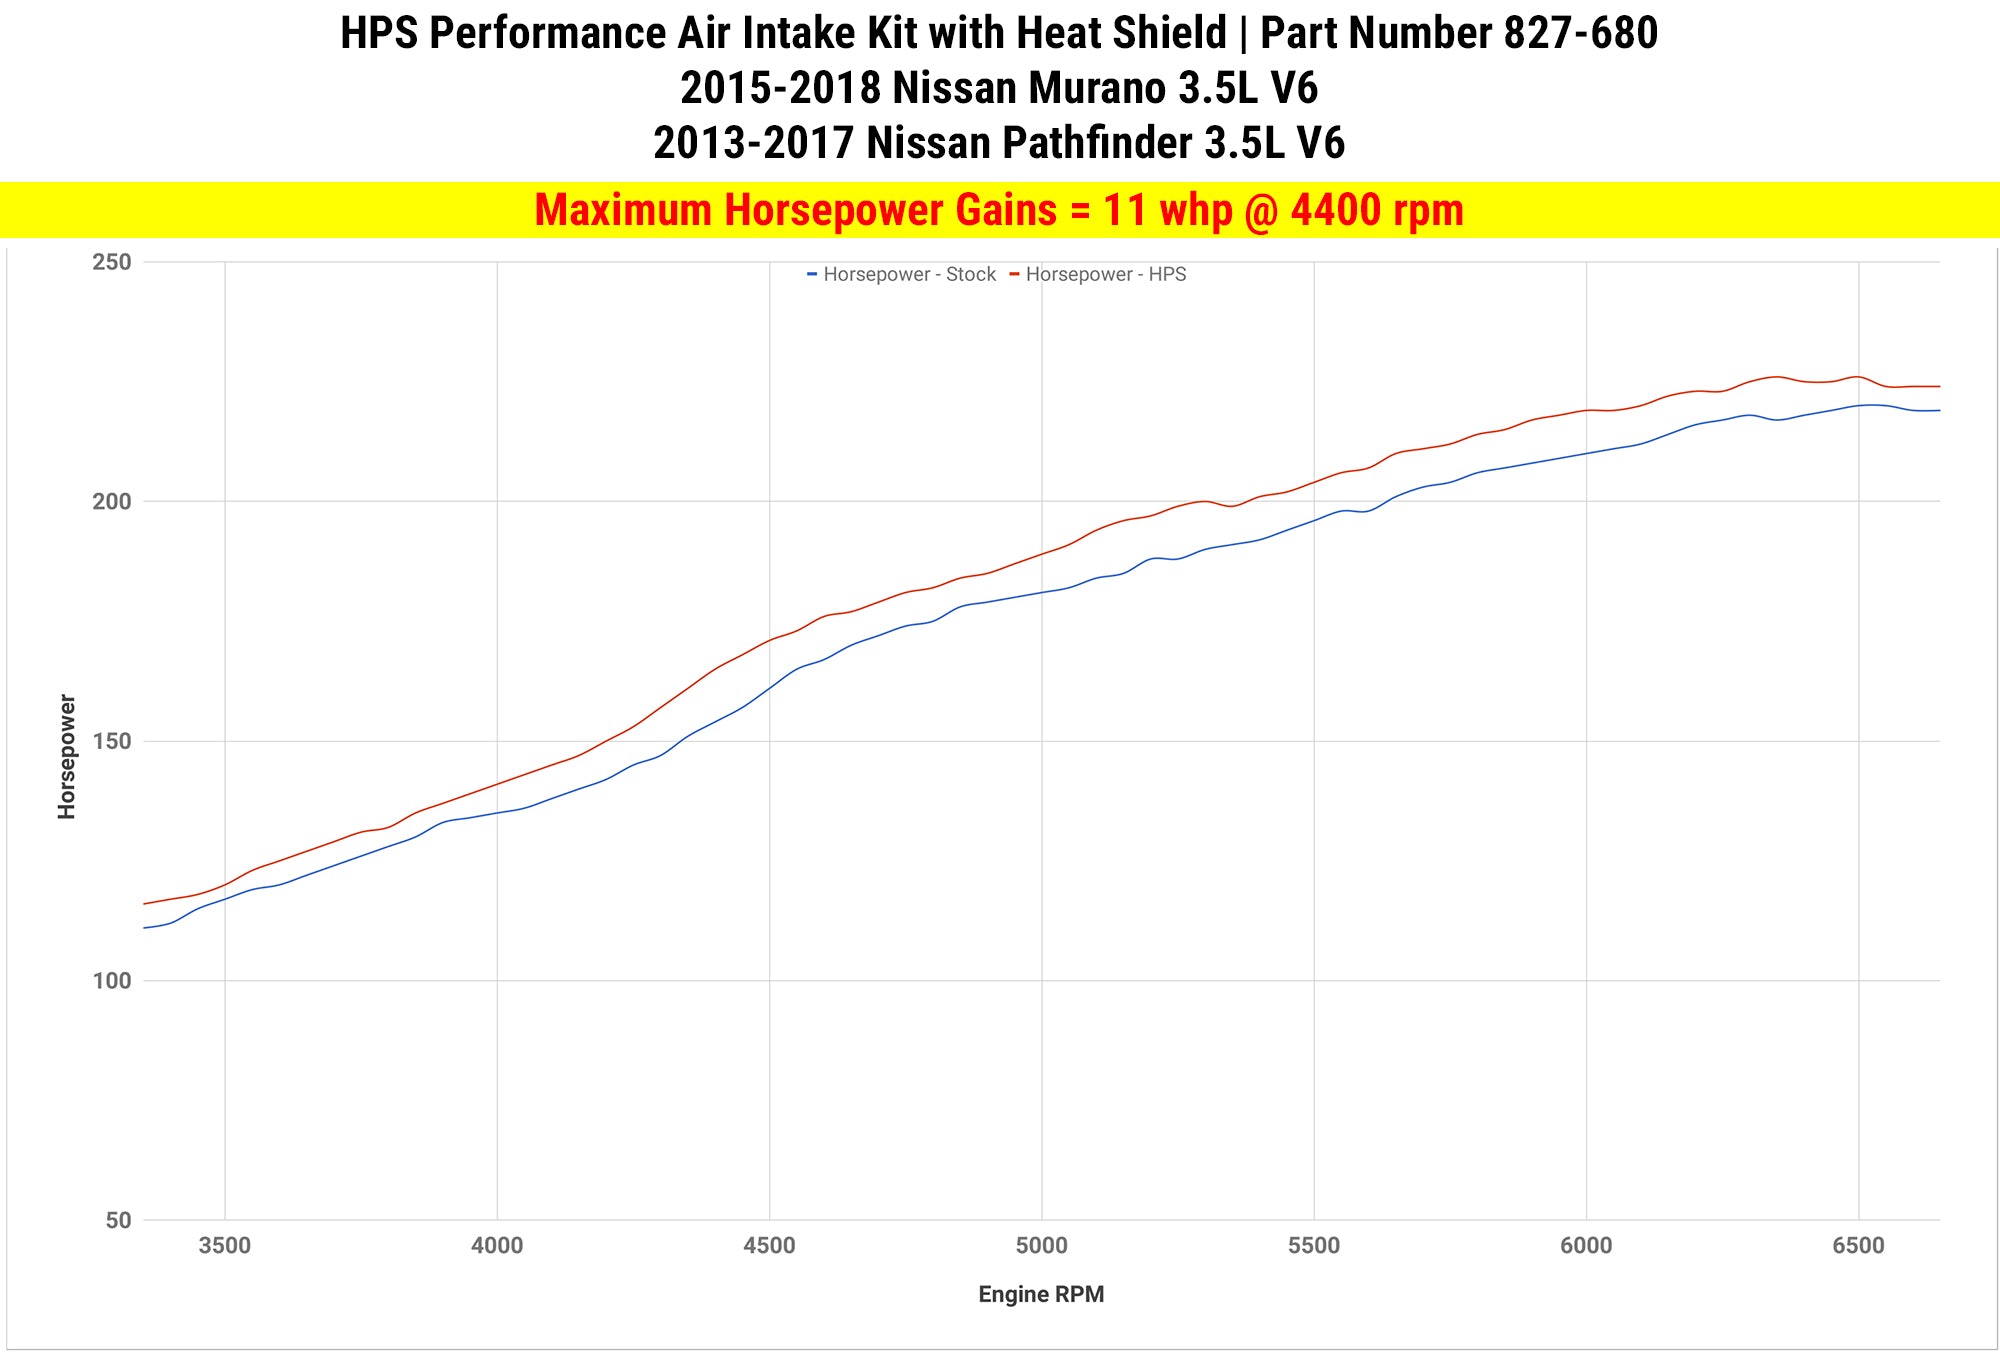 Dyno proven gains 11 whp HPS Performance Shortram Air Intake Kit 2015-2018 Nissan Murano 3.5L V6 827-680P